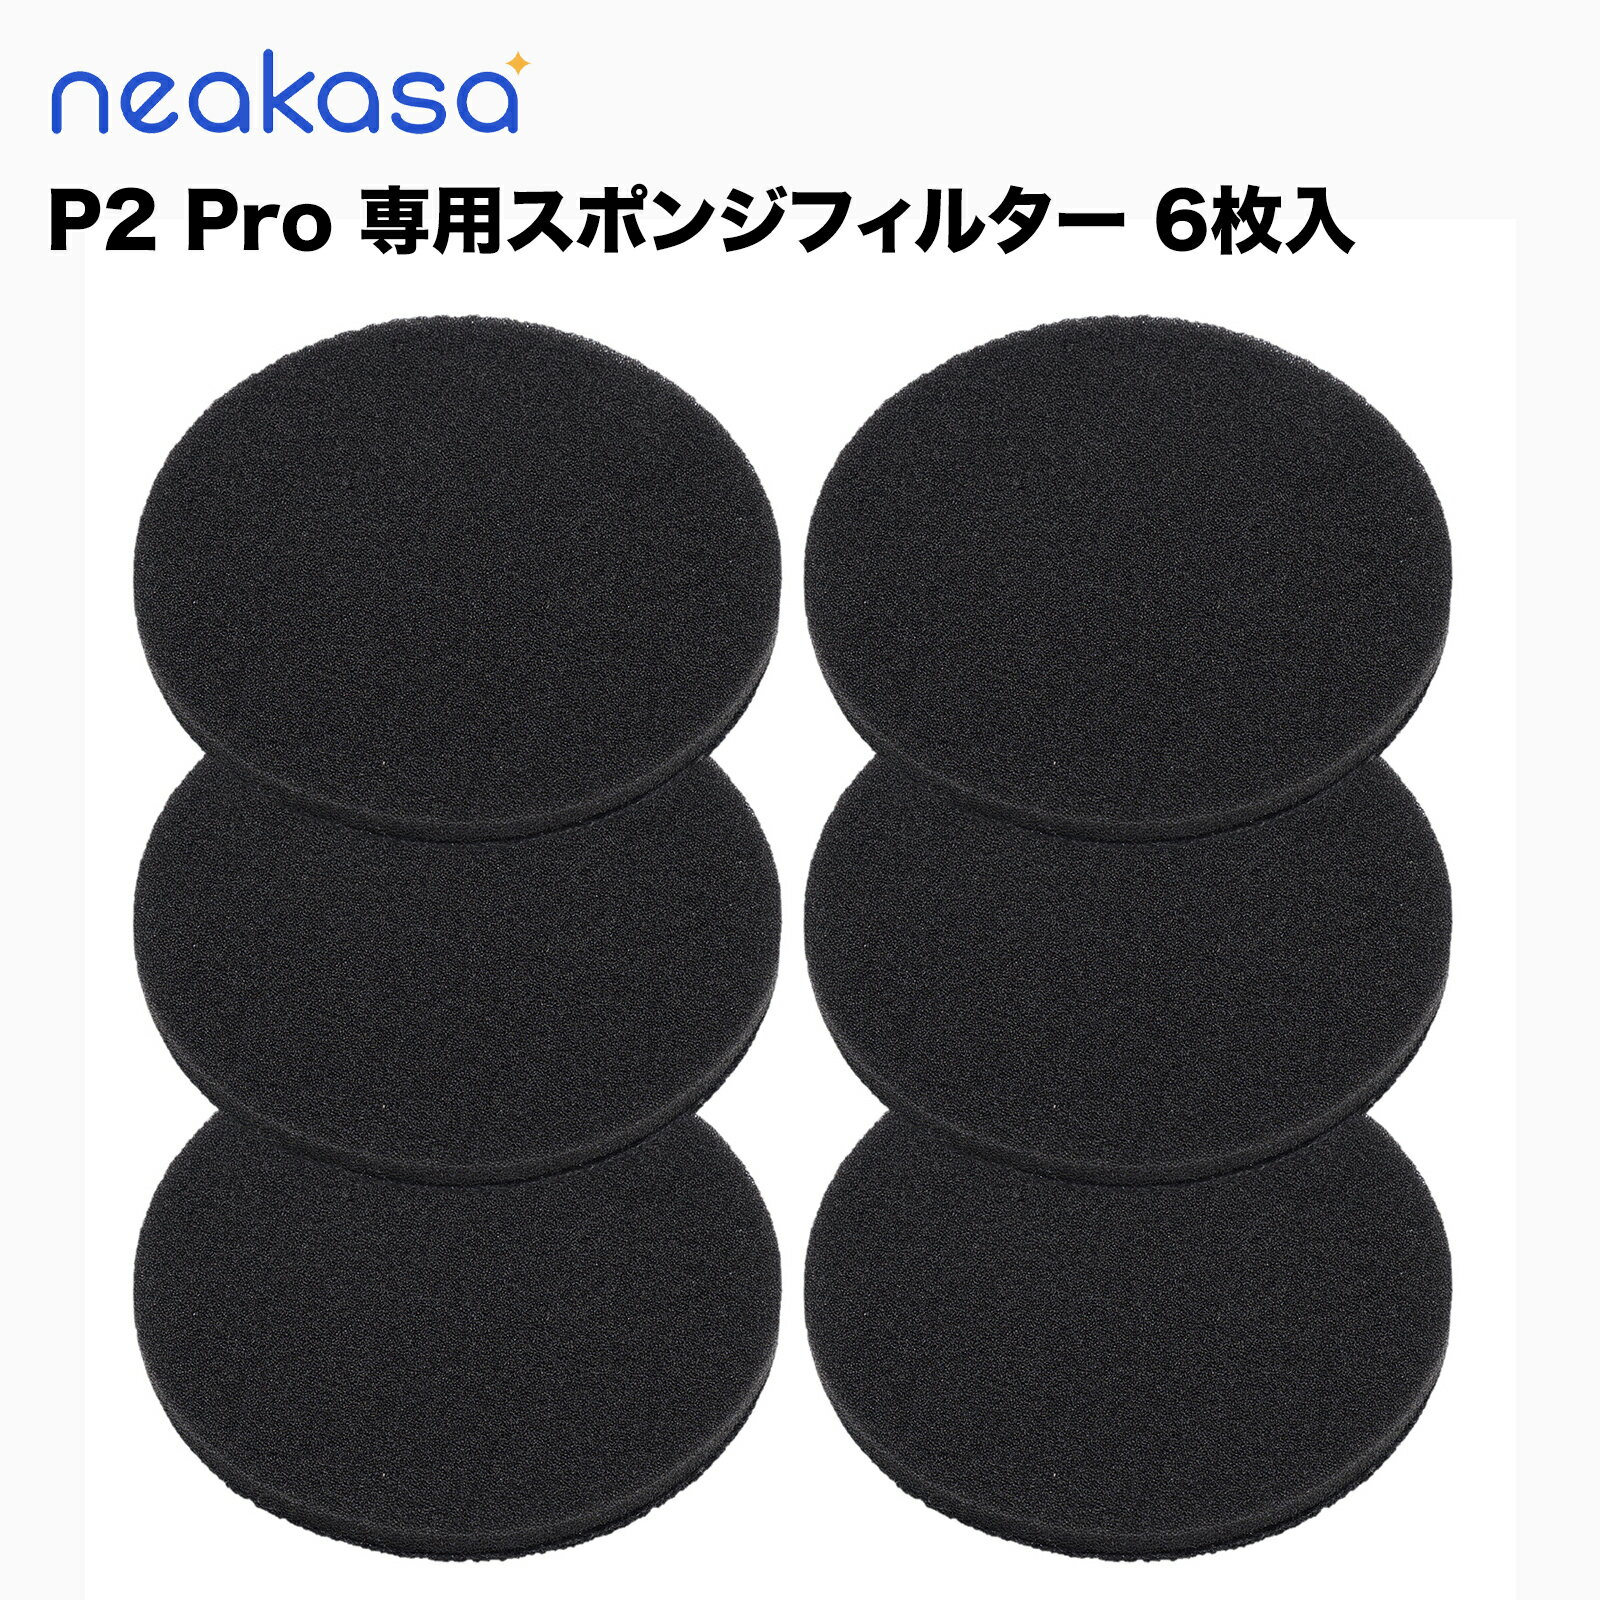 Neakasa P2 Pro スポンジフィルター 6枚入り お手入れ可能 ペットグルーミングセット 消耗品 1~3ケ月一回交換おススメ 送料無料